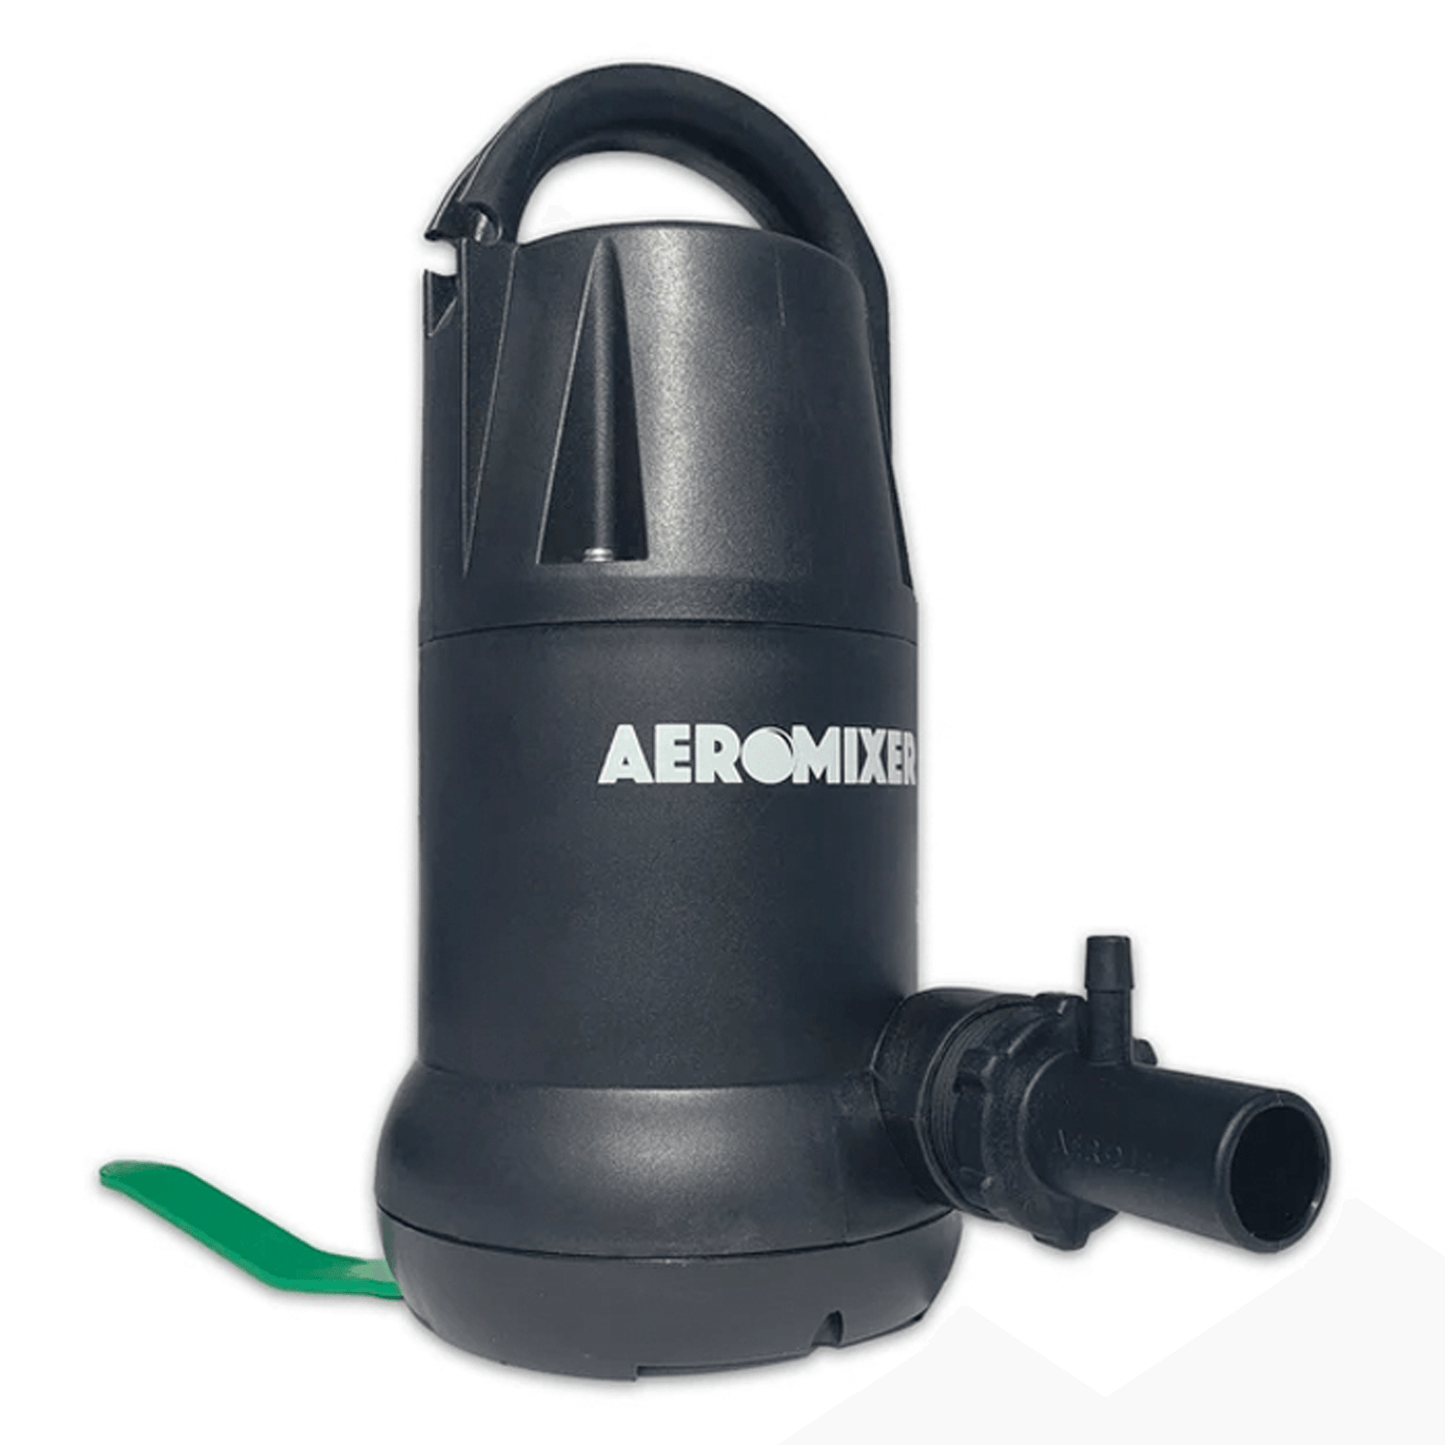 Aeromixer Pump Tall Tank Kit | AERO50-3000TT | Grow Tents Depot | Planting & Watering | 865601000411